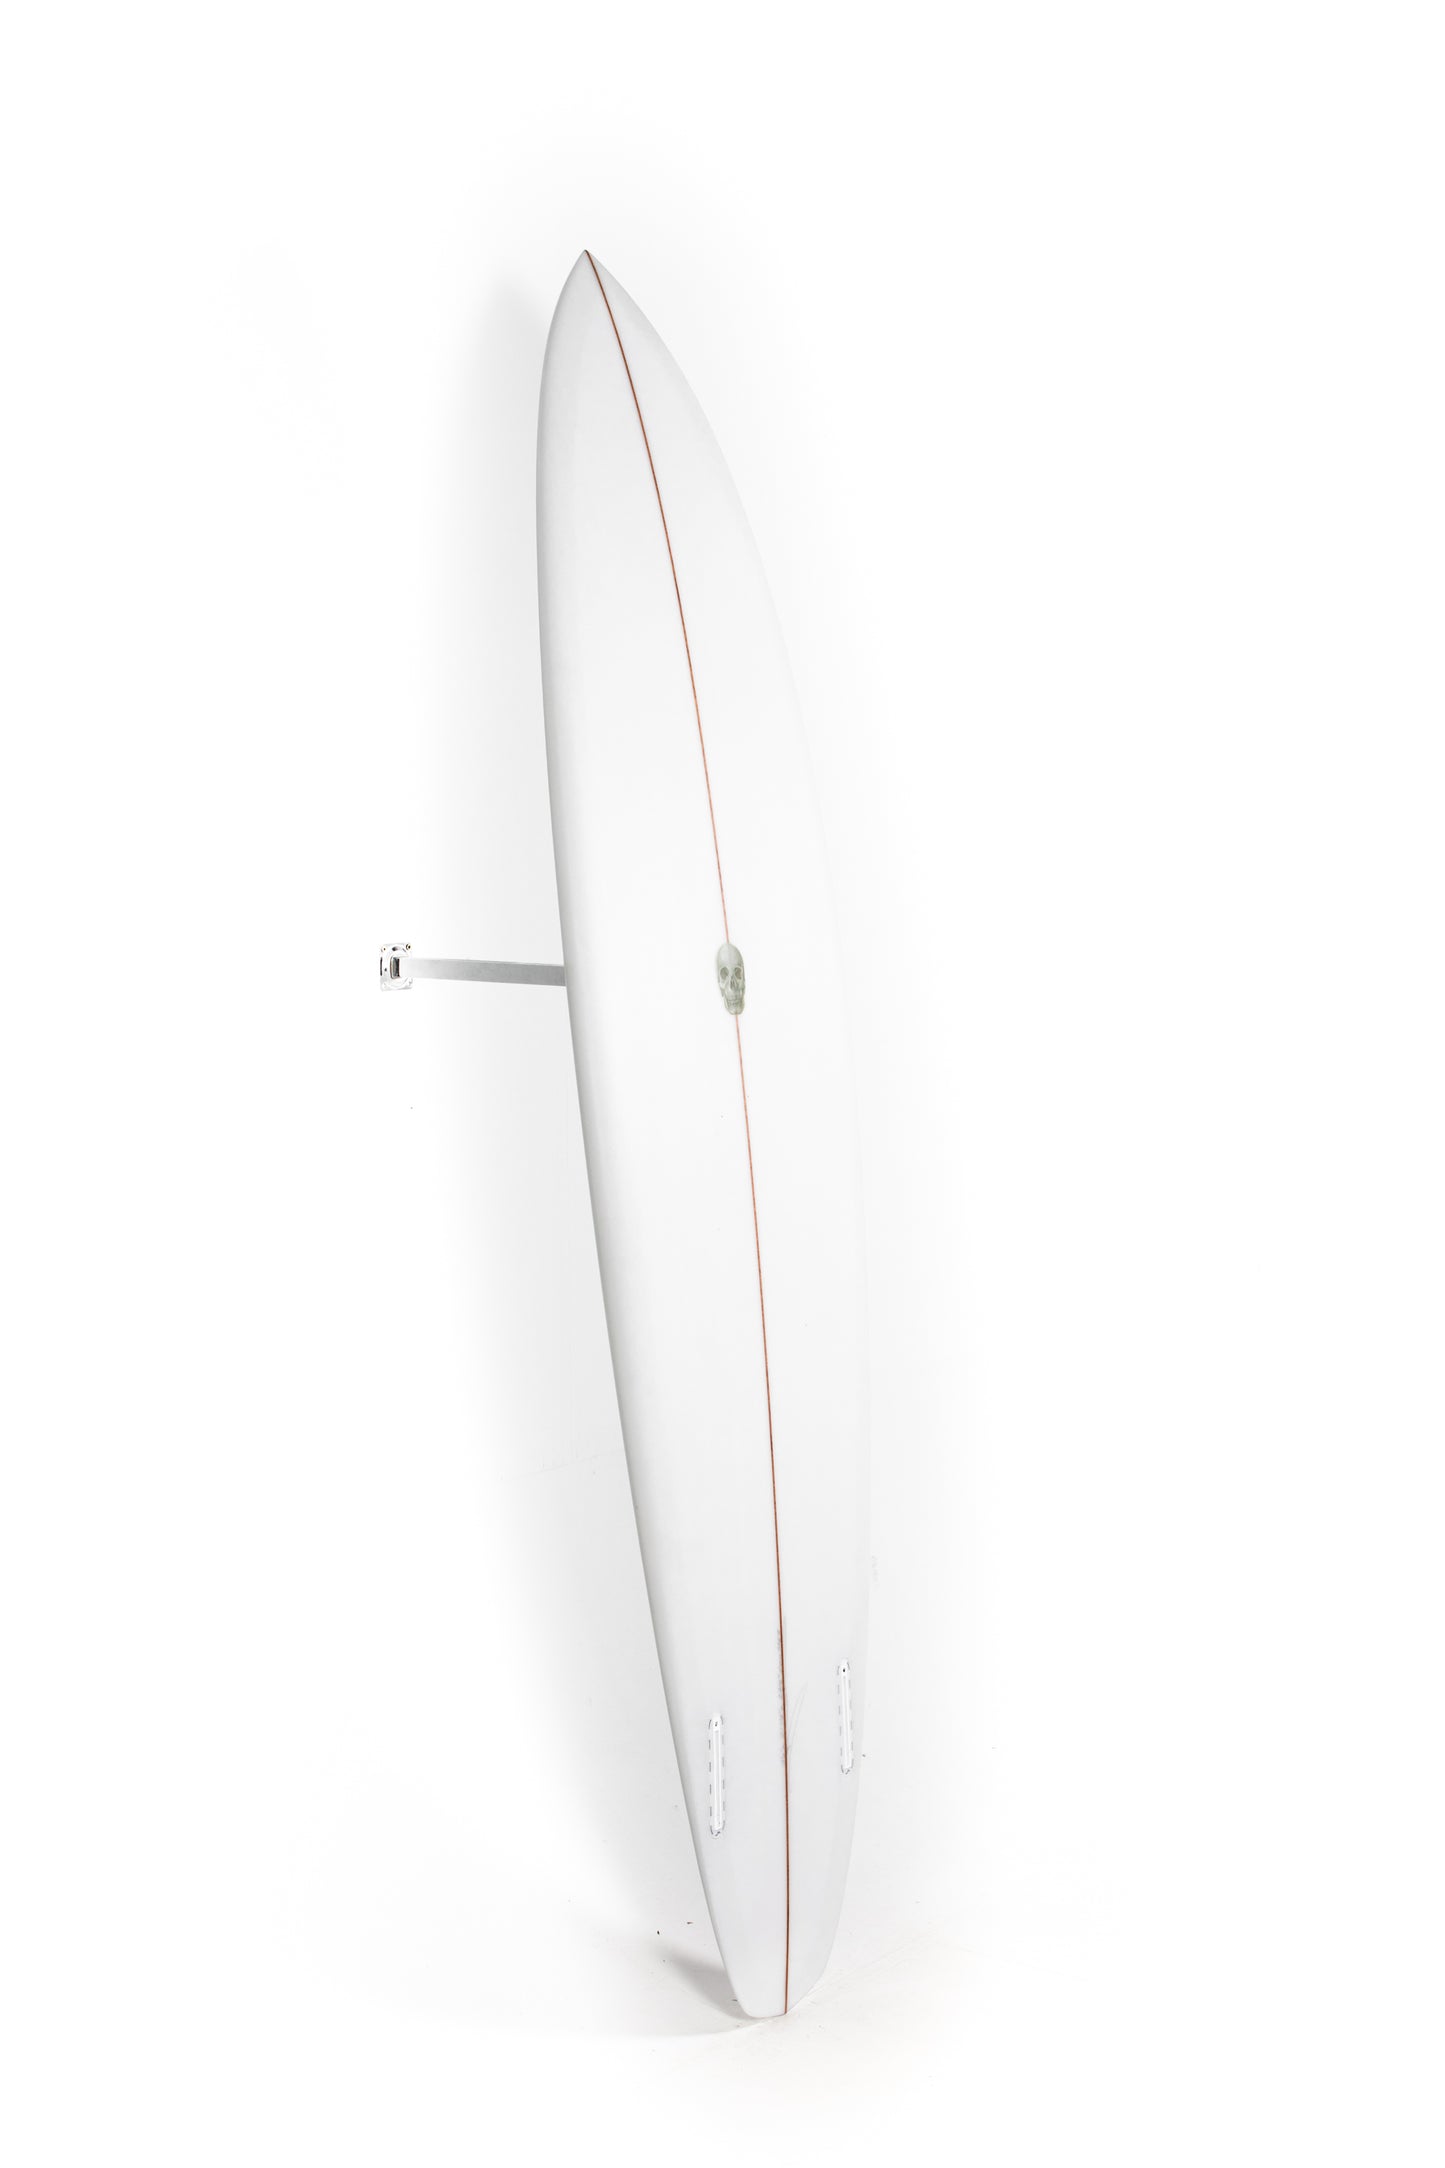 
                  
                    Pukas Surf Shop Christenson Surfboards - ULTRA TRACKER TWIN - 7'0" x 21 1/4 x 2 7/8 - CX05165
                  
                